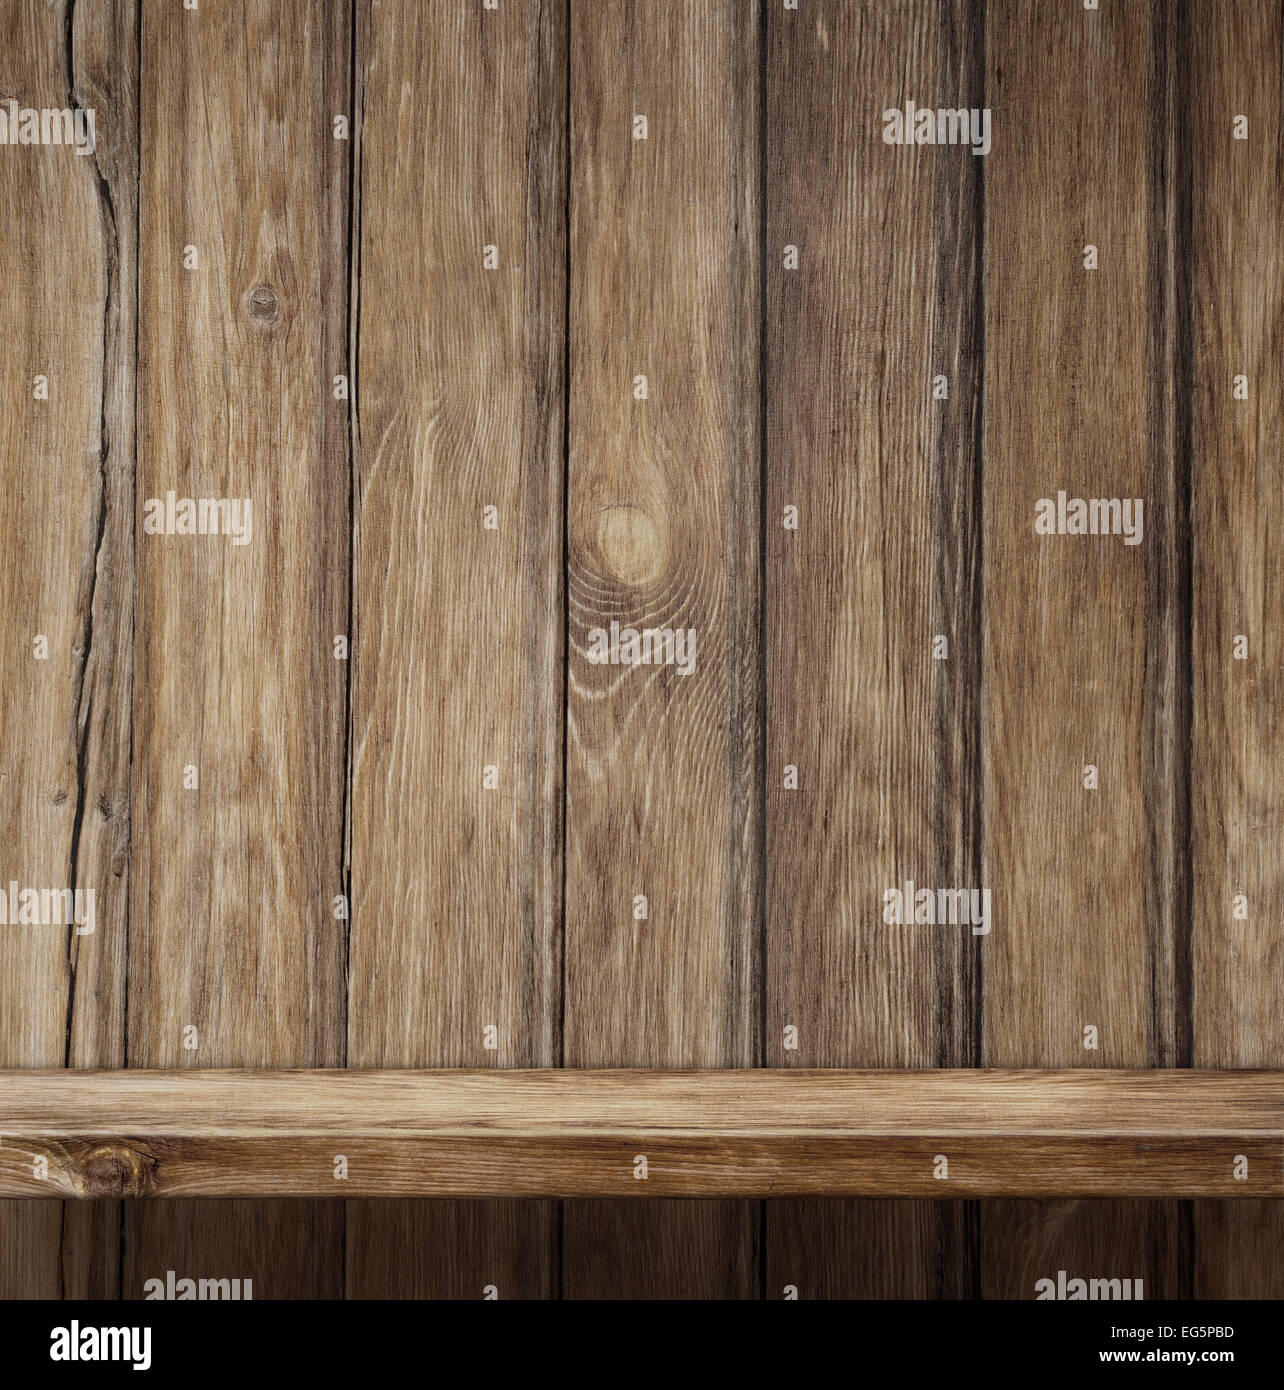 Empty wood shelf background Stock Photo